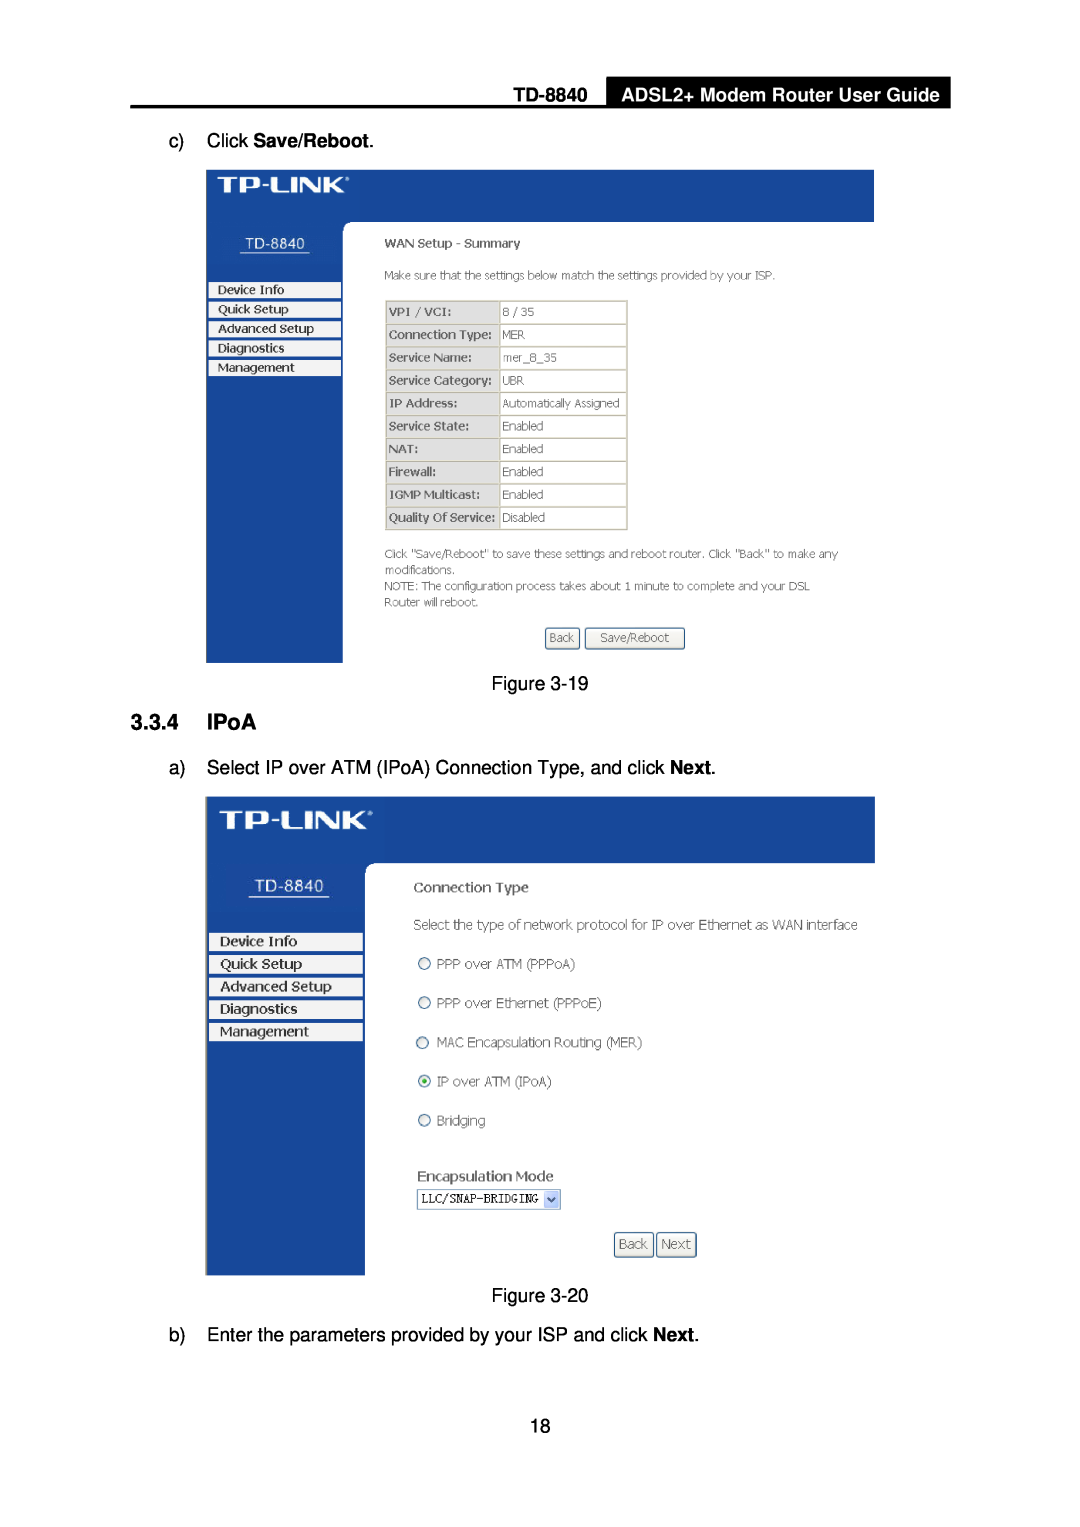 TP-Link TD-8840 manual 3.3.4IPoA, ADSL2+ Modem Router User Guide, cClick Save/Reboot 